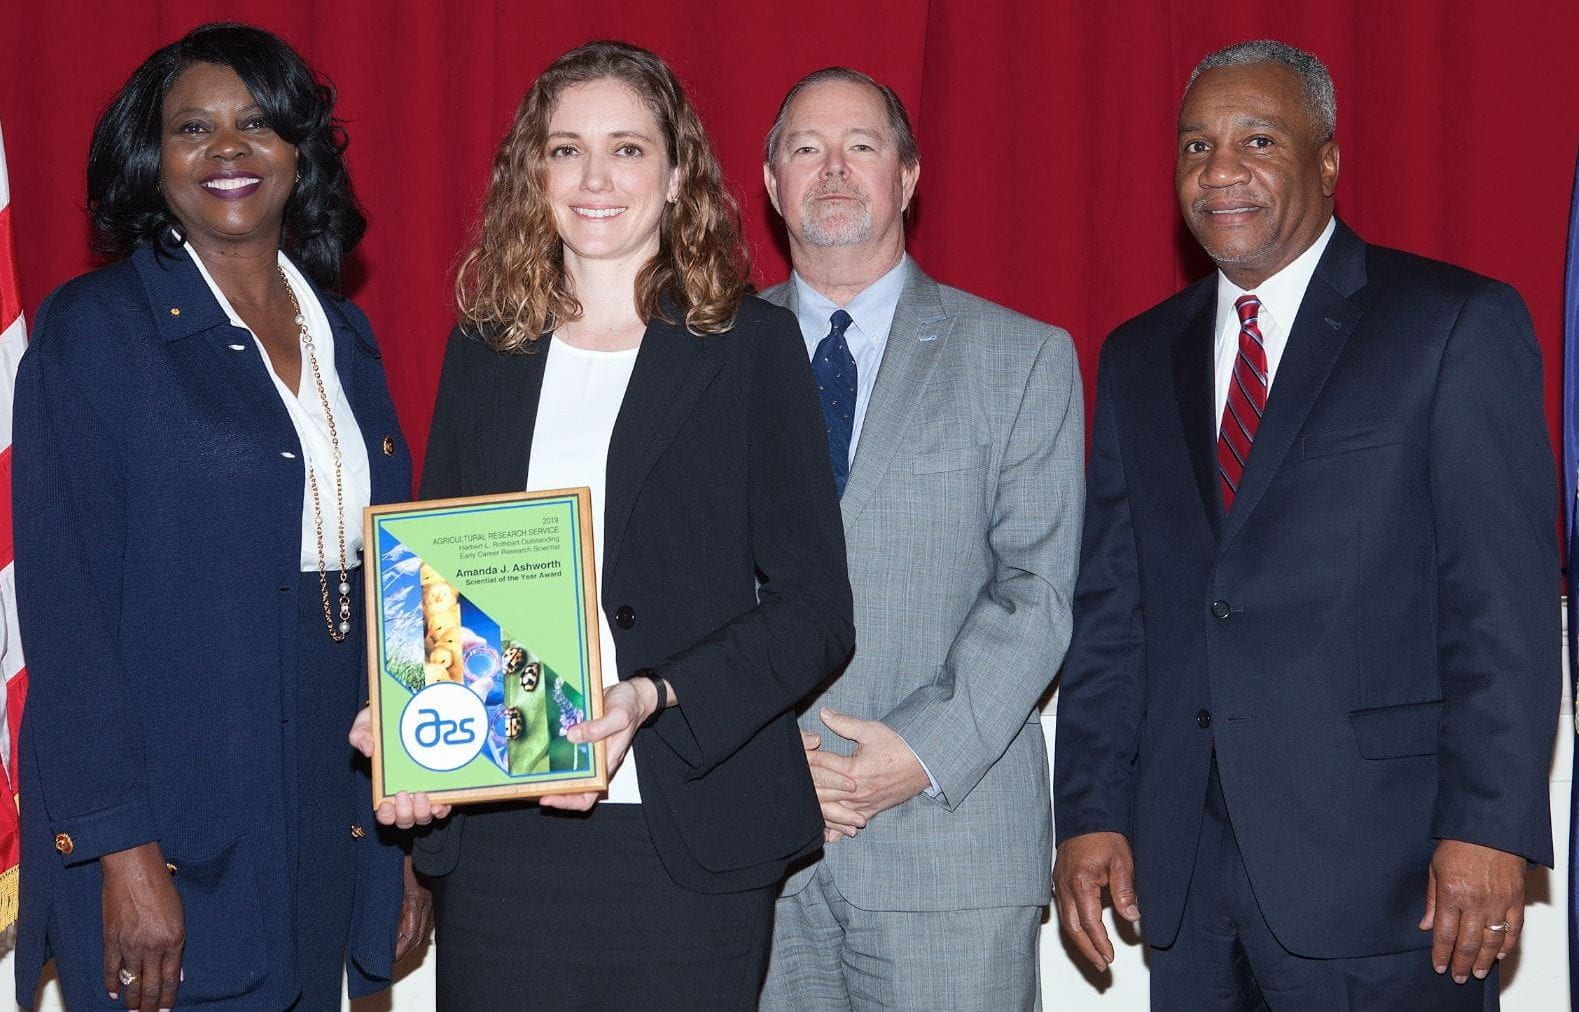 Amanda Ashworth Receives National Early Career Award from USDA-ARS